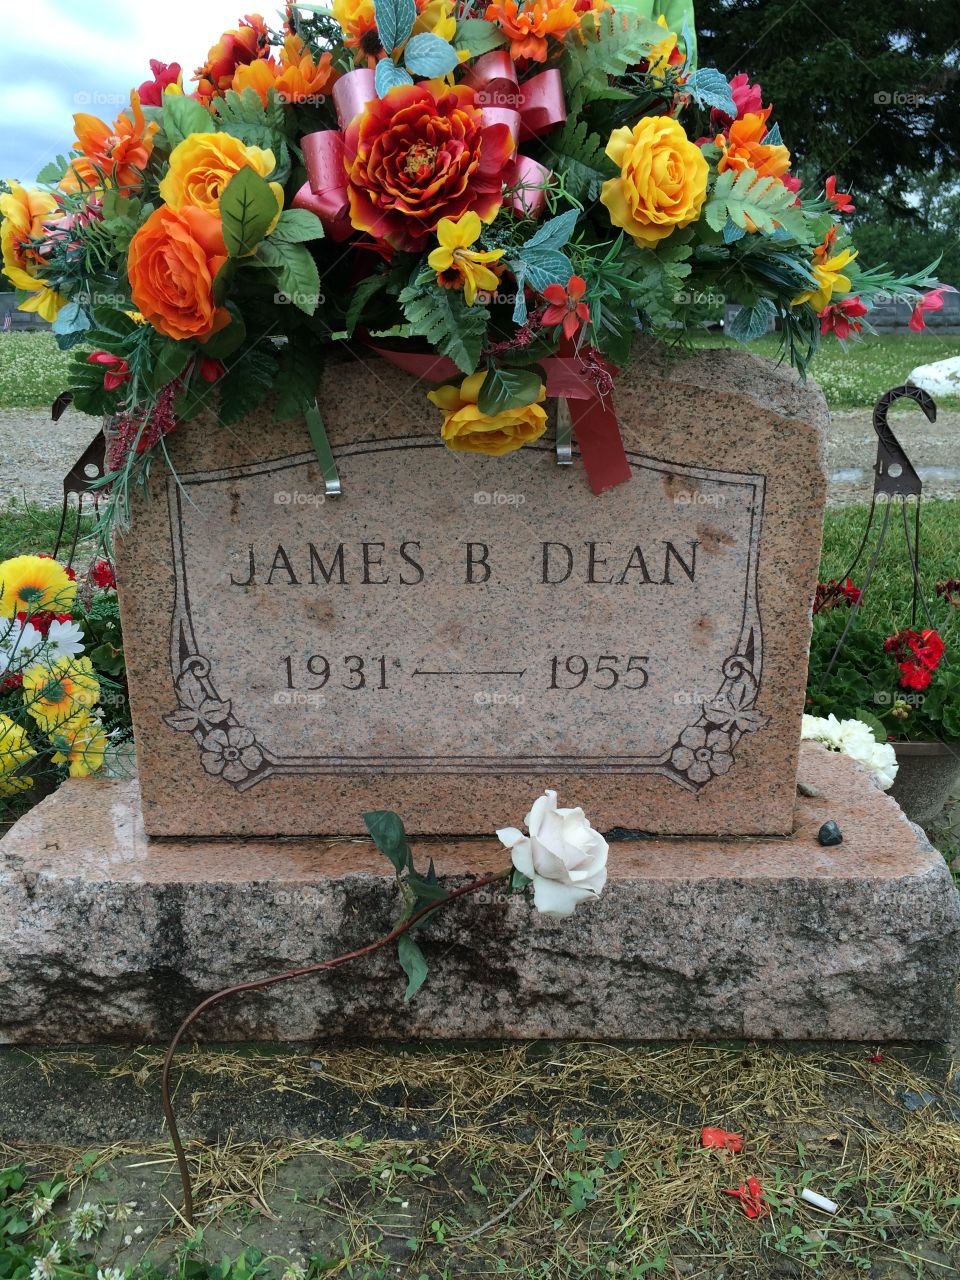 Janes Dean grave in Fairmount Indiana